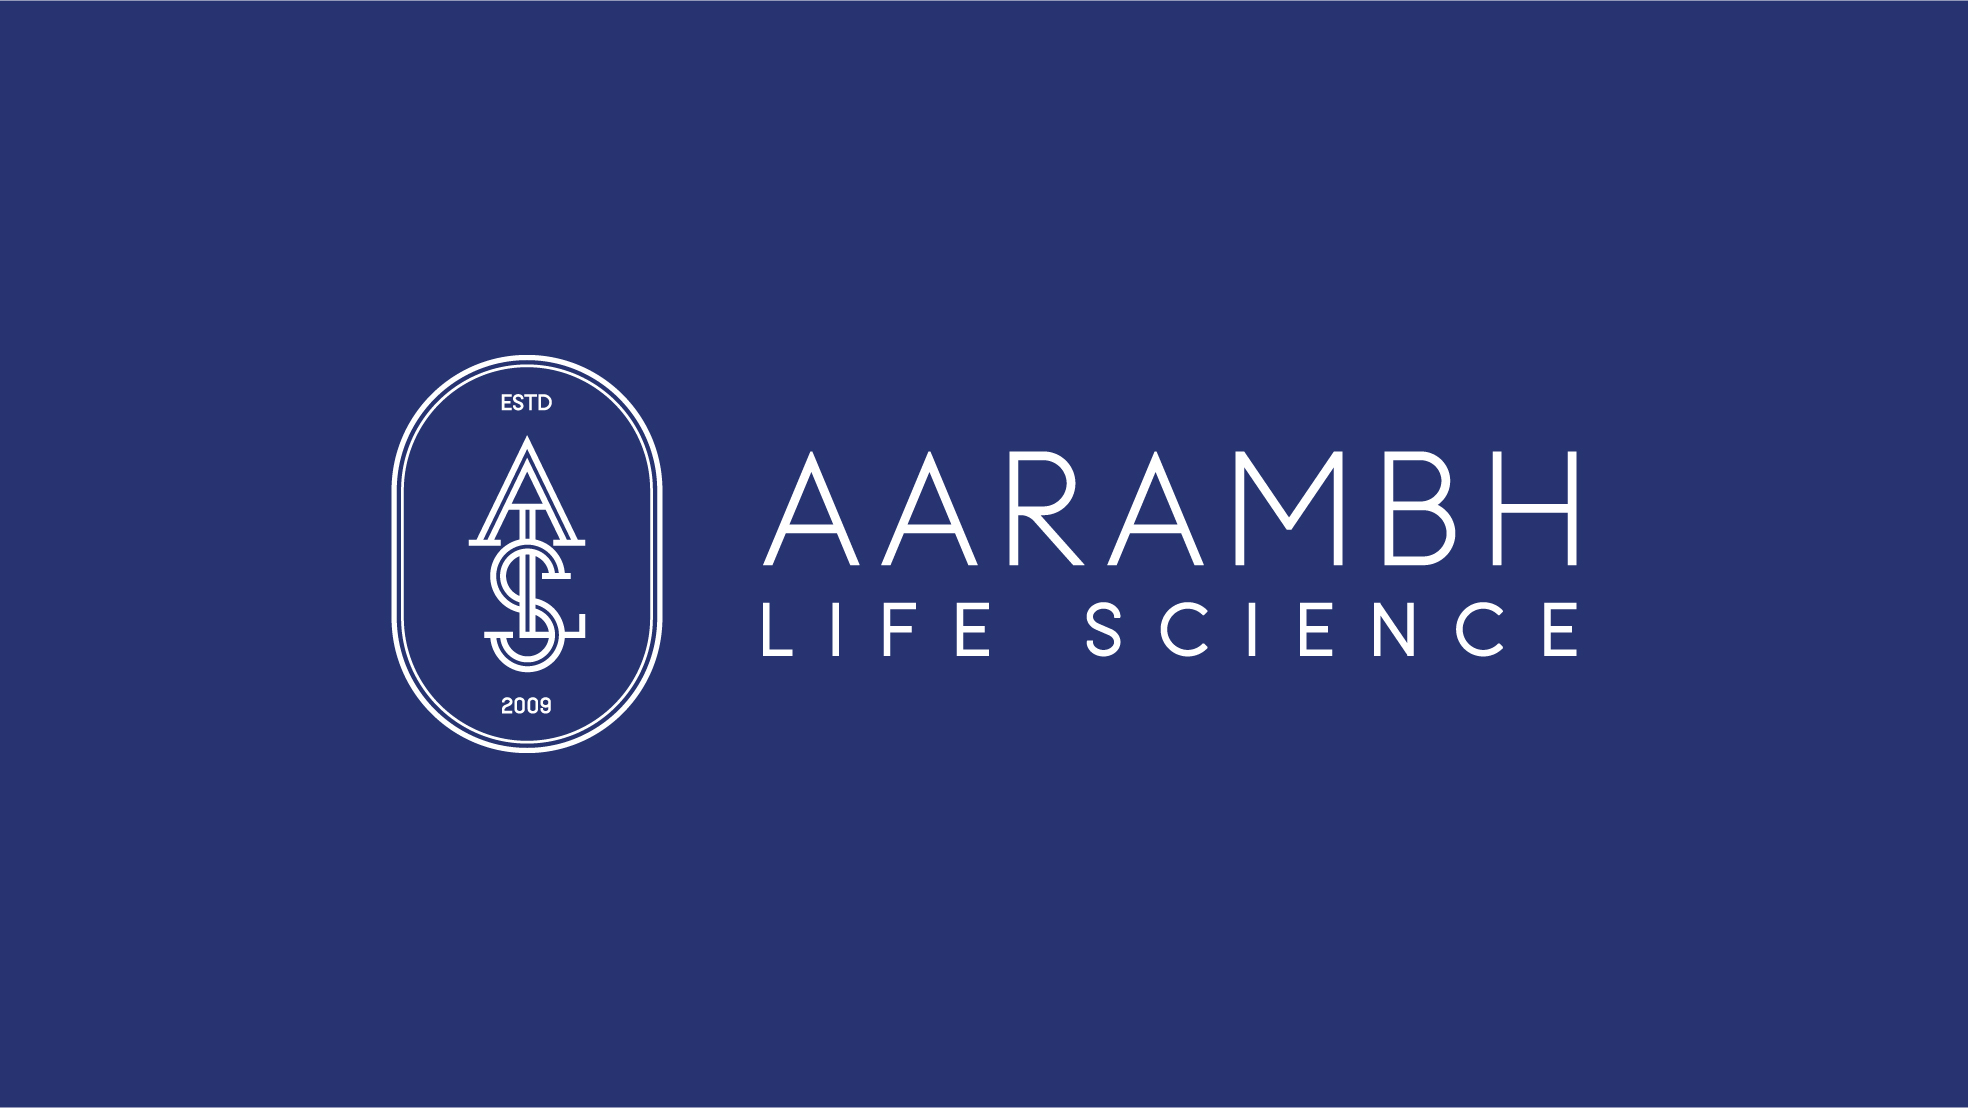 AARAMBH LIFE SCIENCE